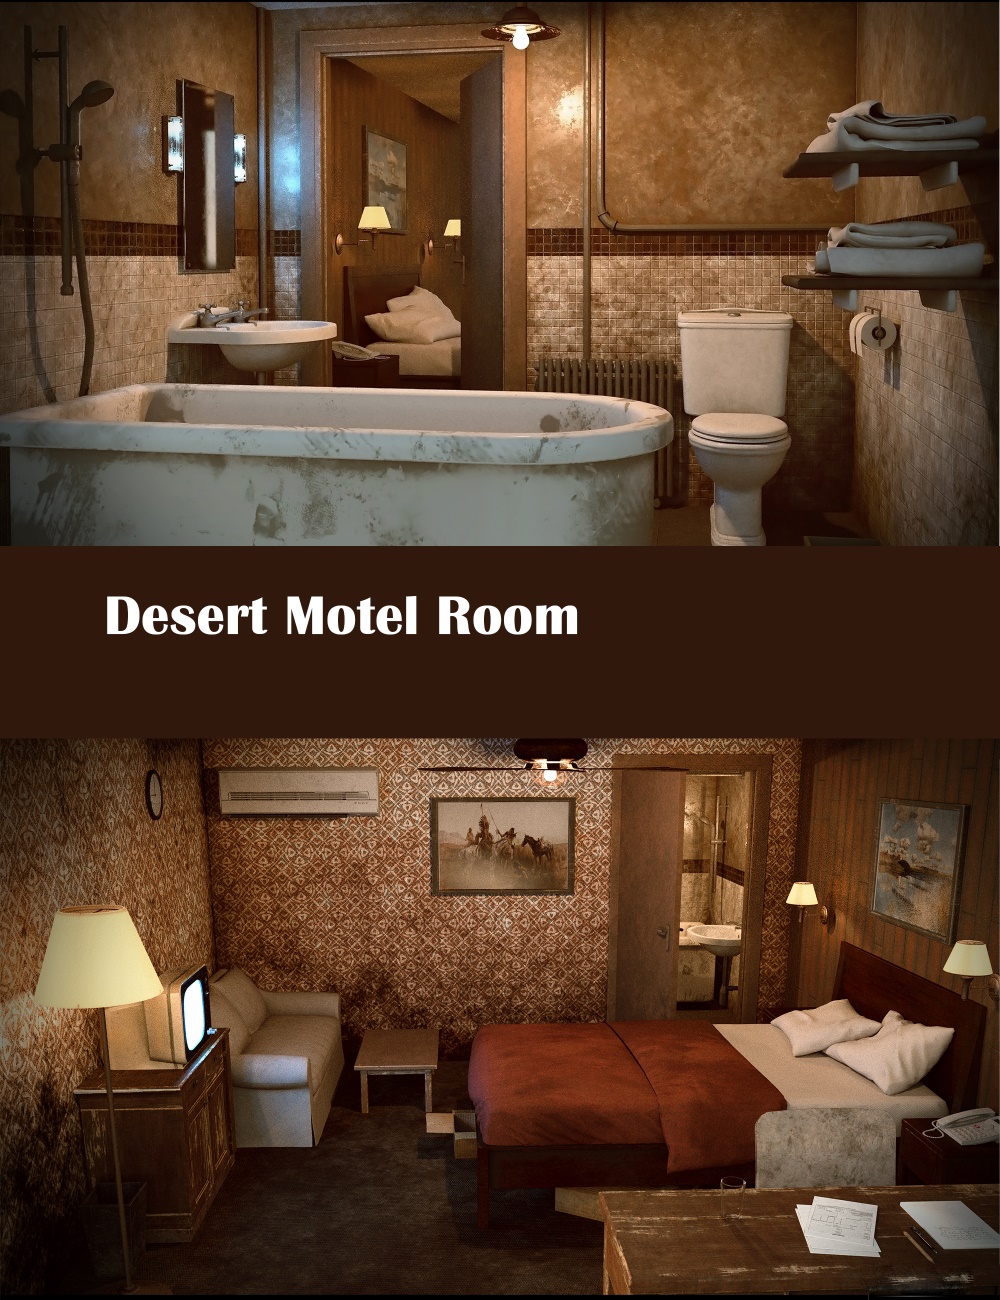 Desert Motel Room by: Polish, 3D Models by Daz 3D